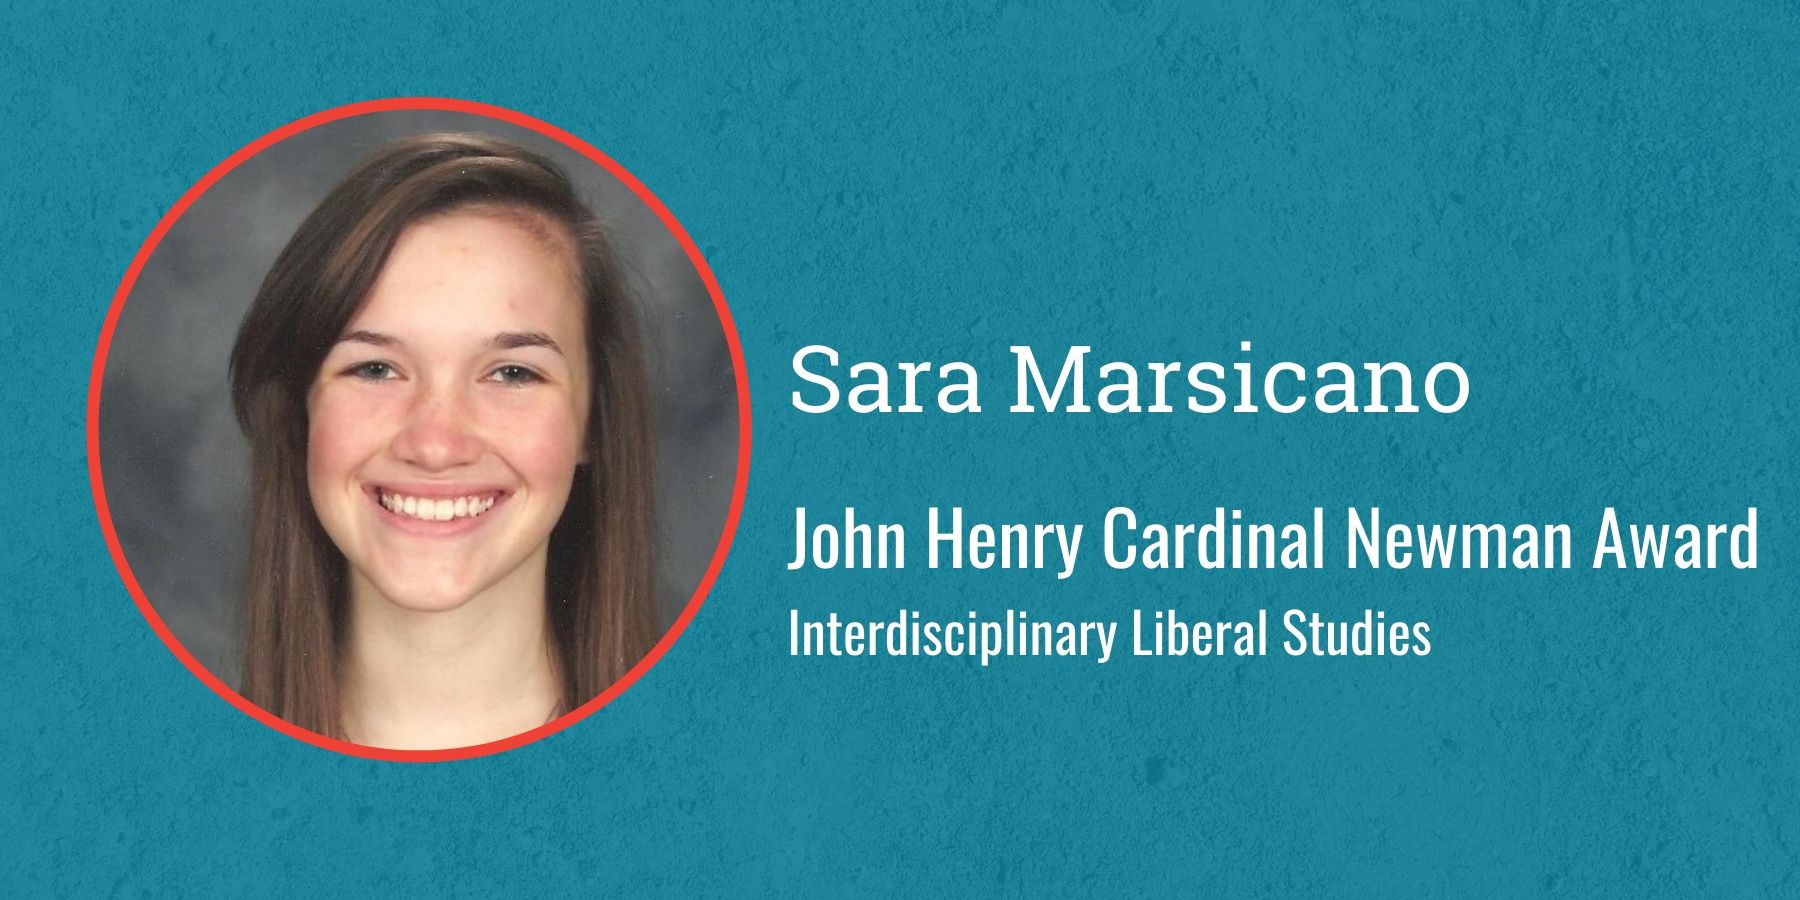 Photo of Sara Marsicano, text John Henry Cardinal Newman Award, Interdisciplinary Liberal Studies